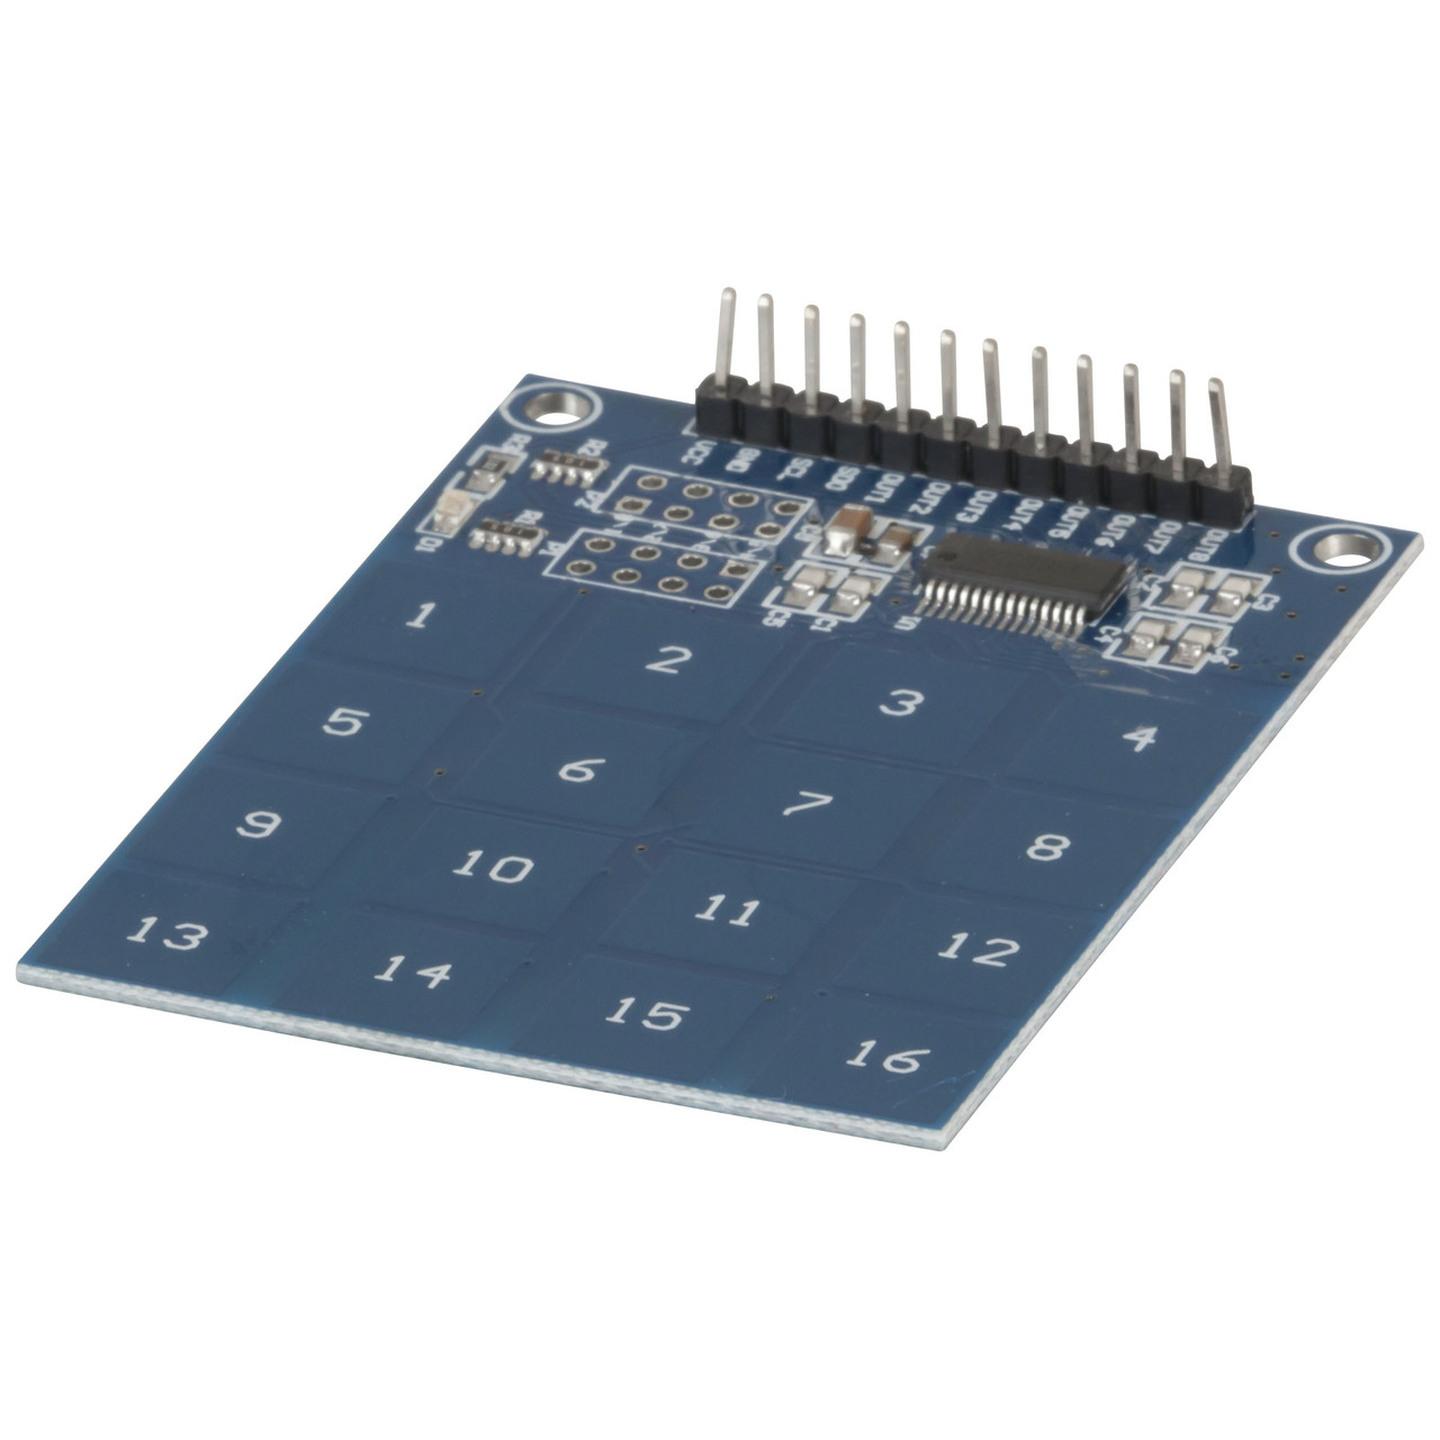 Duinotech Arduino Compatible 16 Key Touchpad Module